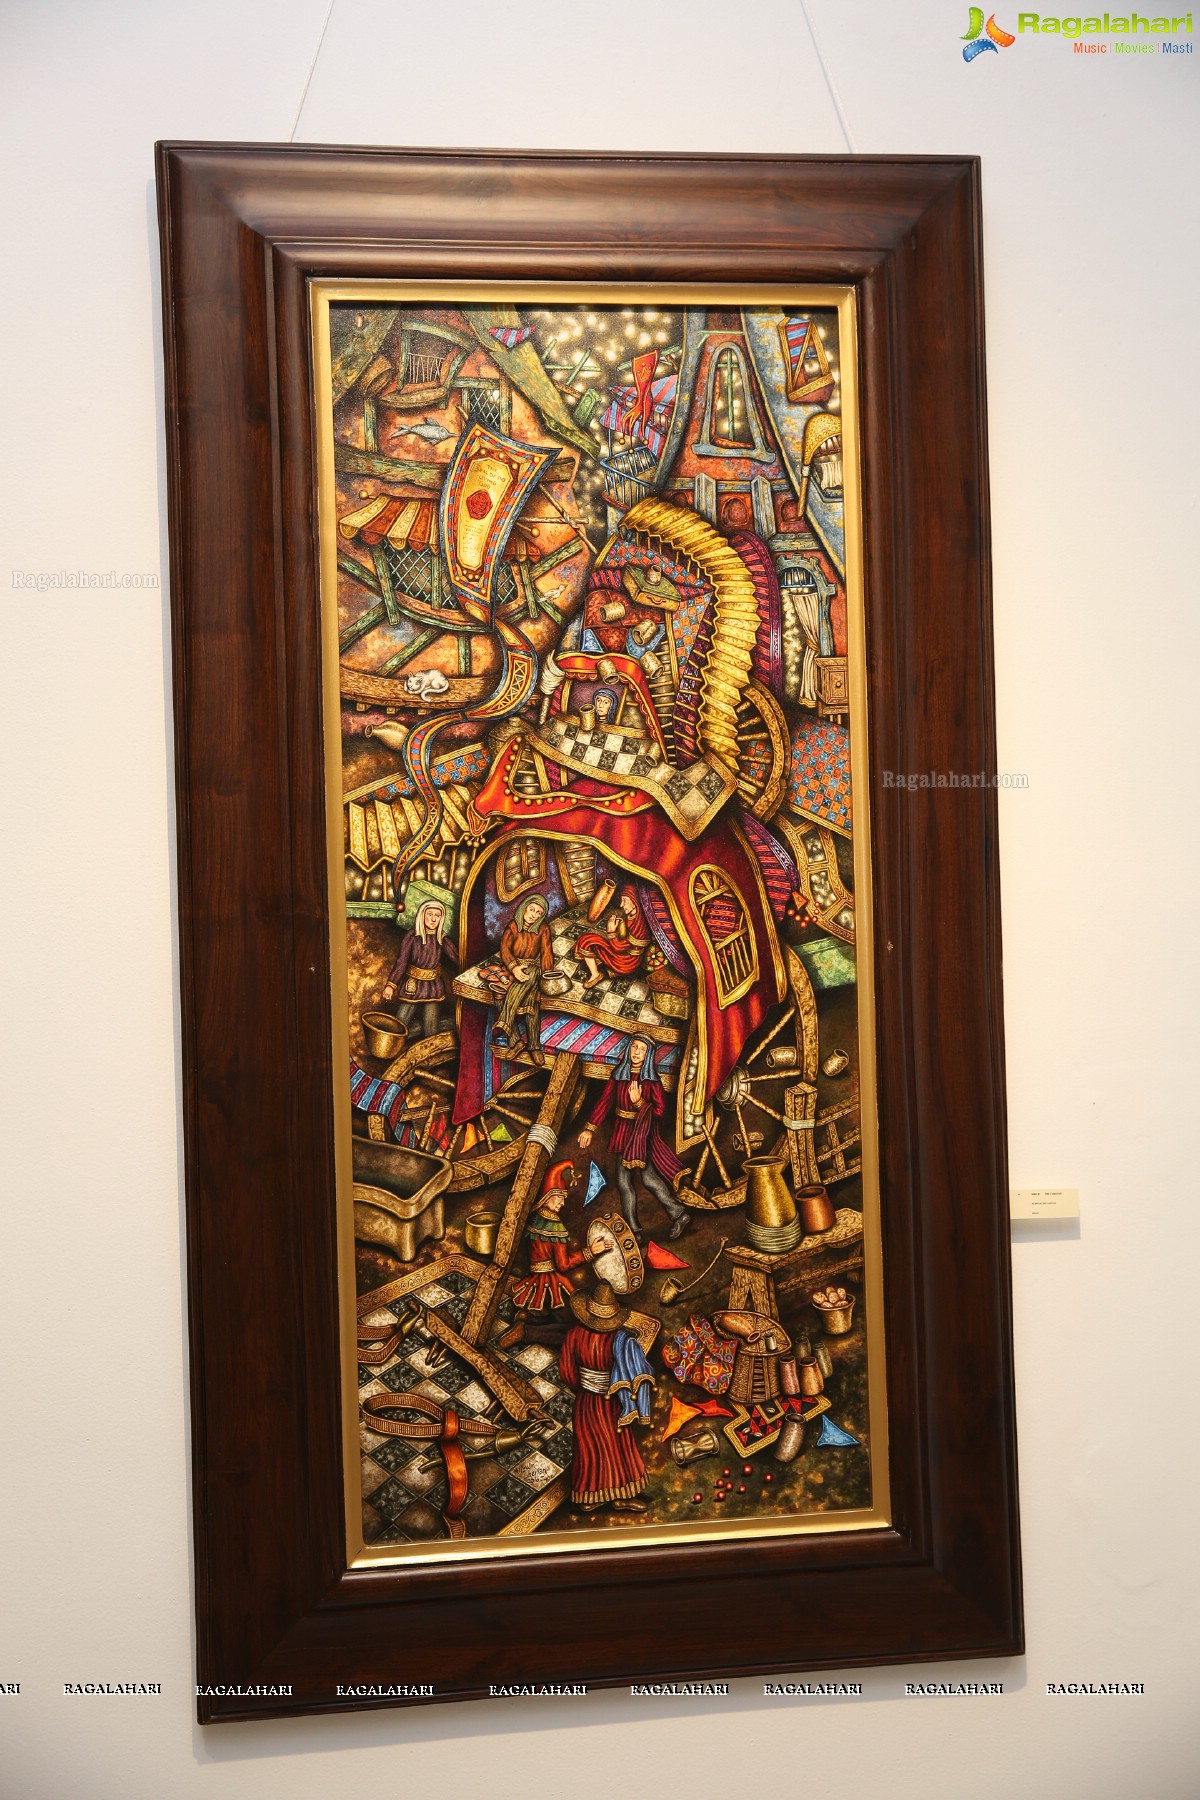 Milburn Cherian Showcasing the Artwork at State Art gallery, Hyderabad